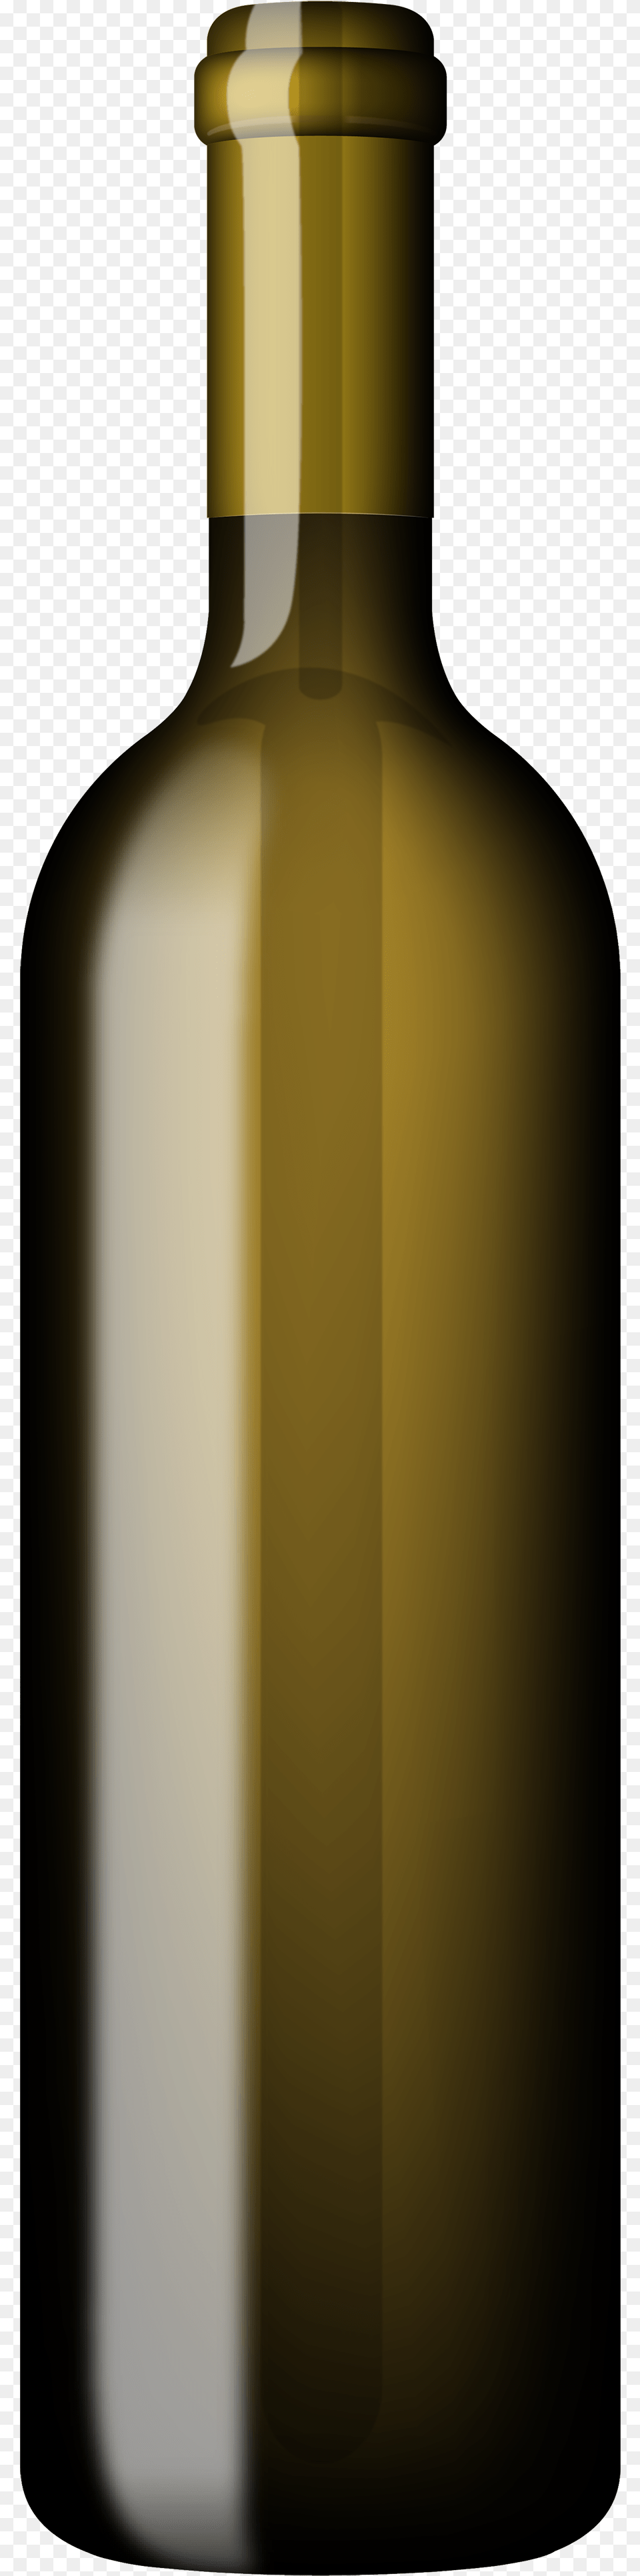 Green Bottle Of Wine Clipart, Alcohol, Beverage, Liquor, Wine Bottle Png Image